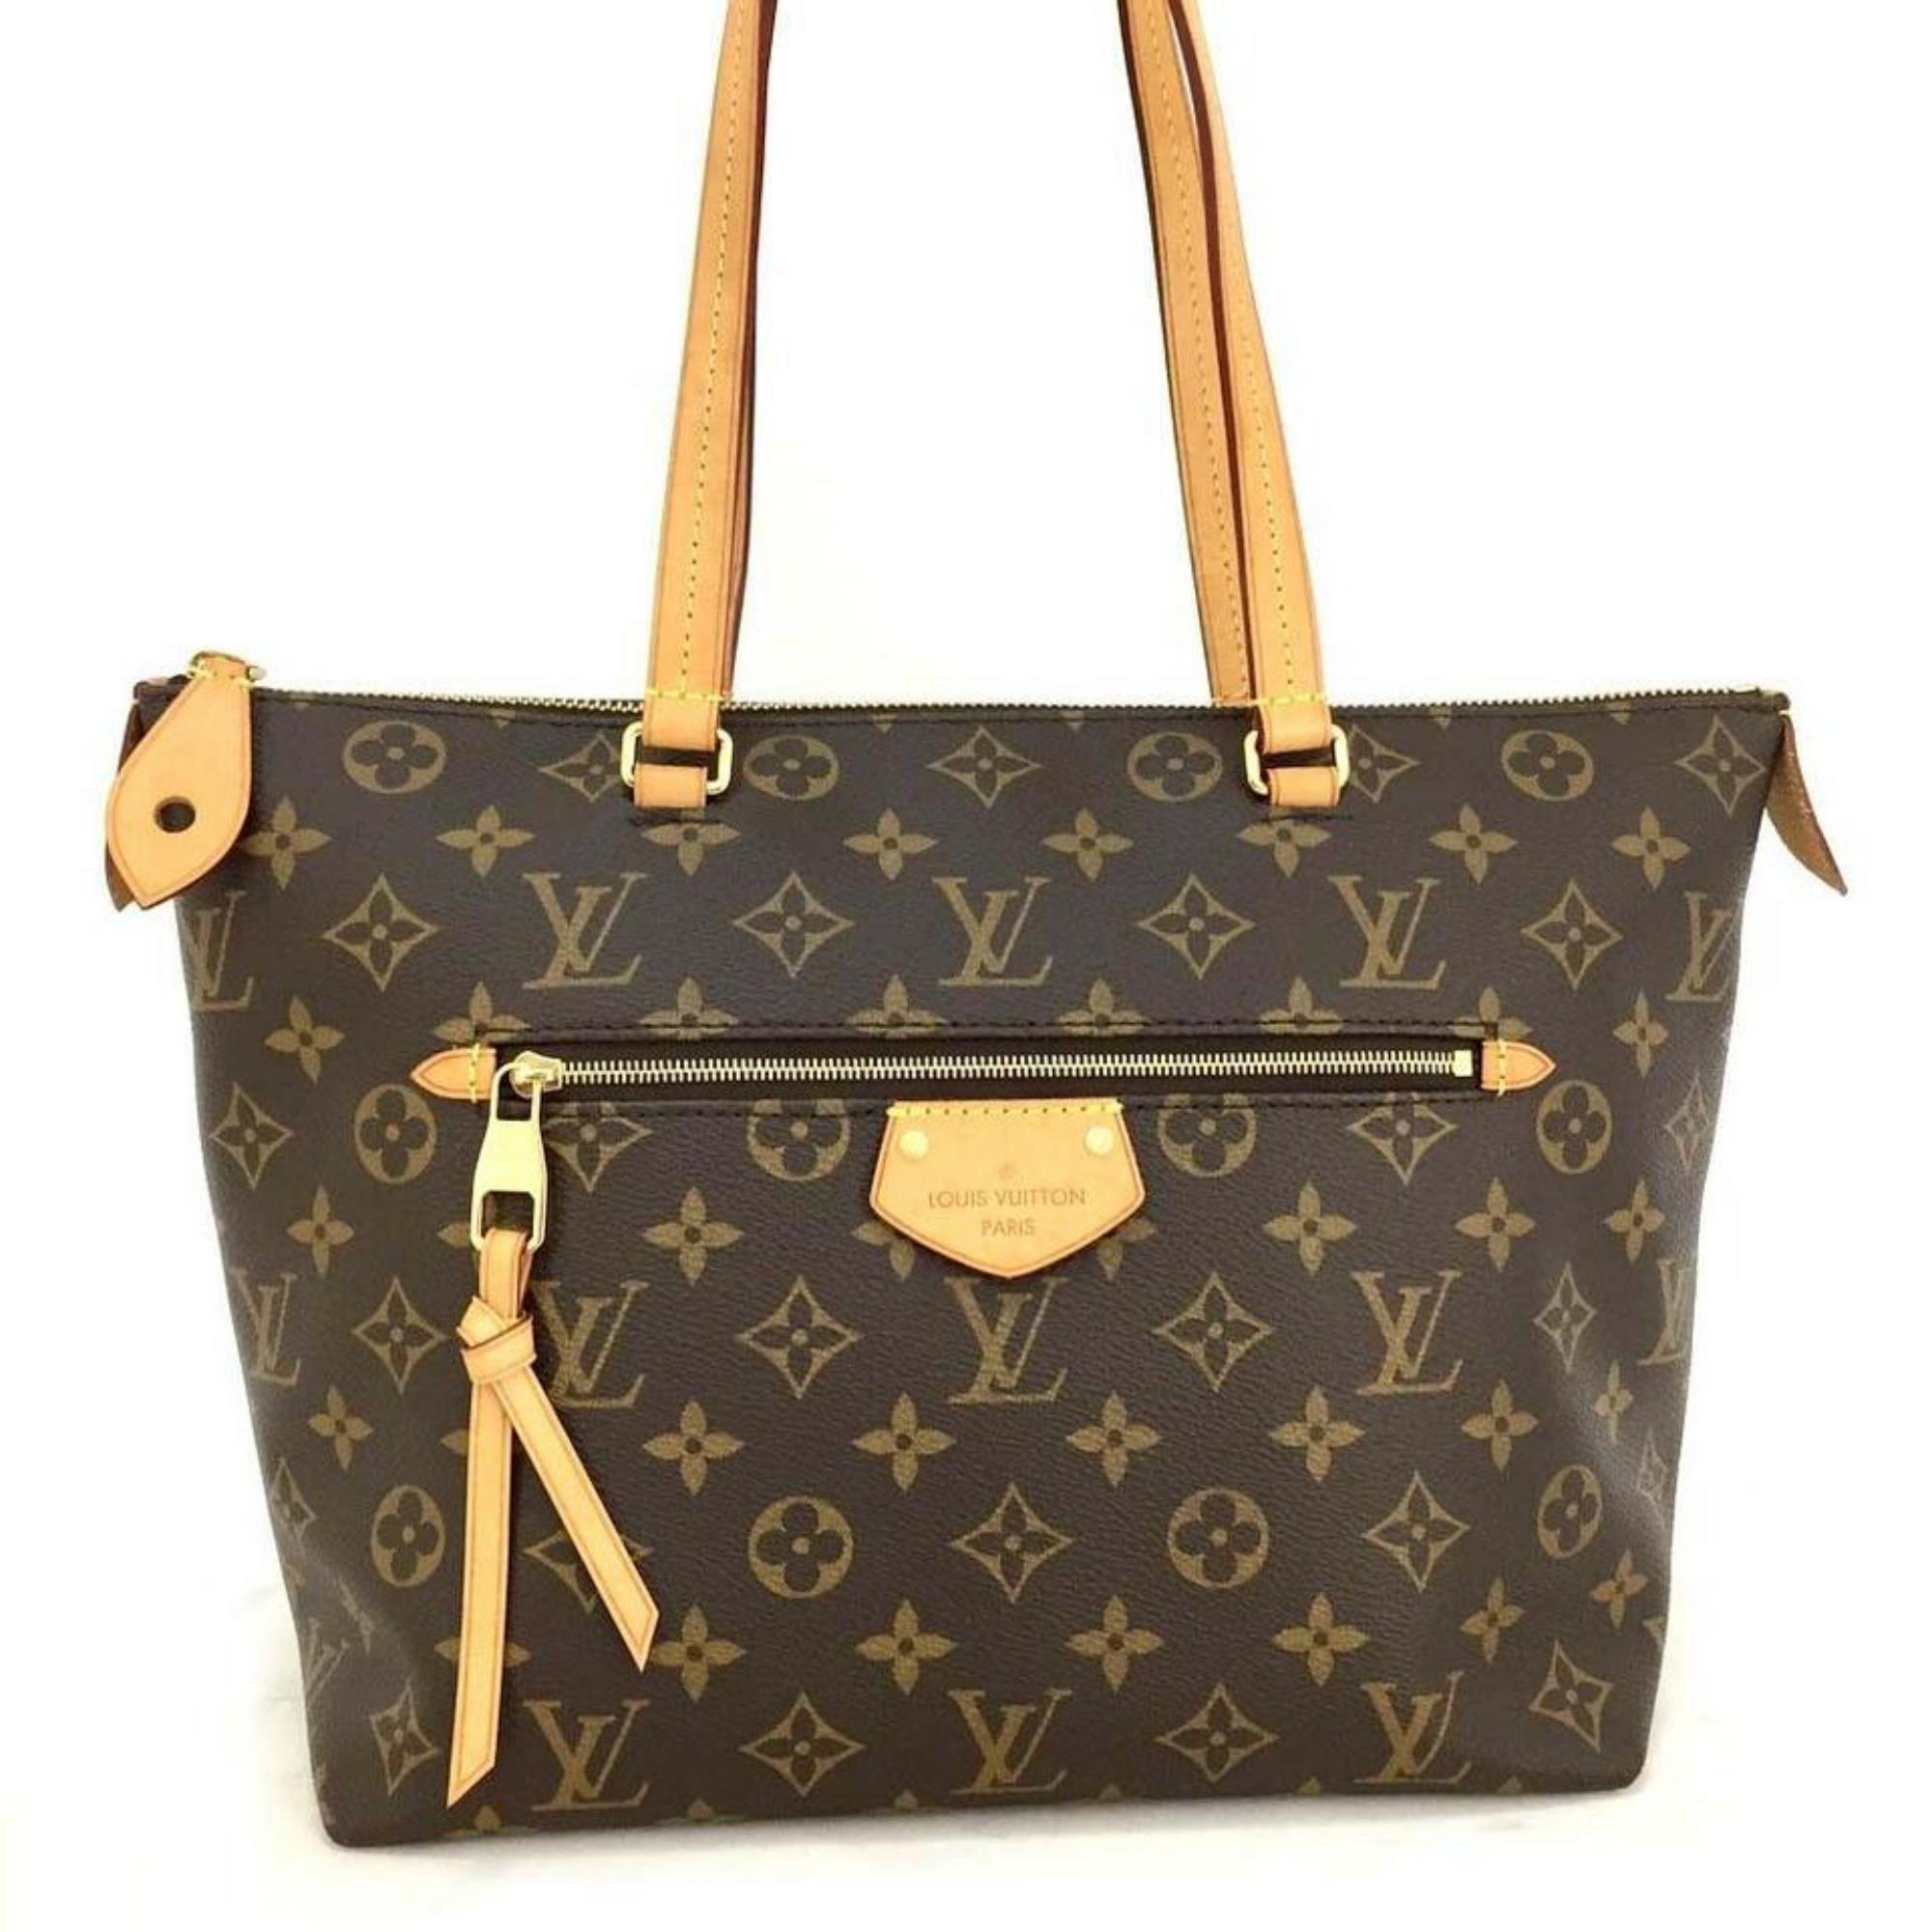 Louis Vuitton Iena Monogram Pm Zip Tote 870371 Brown Coated Canvas Shoulder Bag For Sale 3